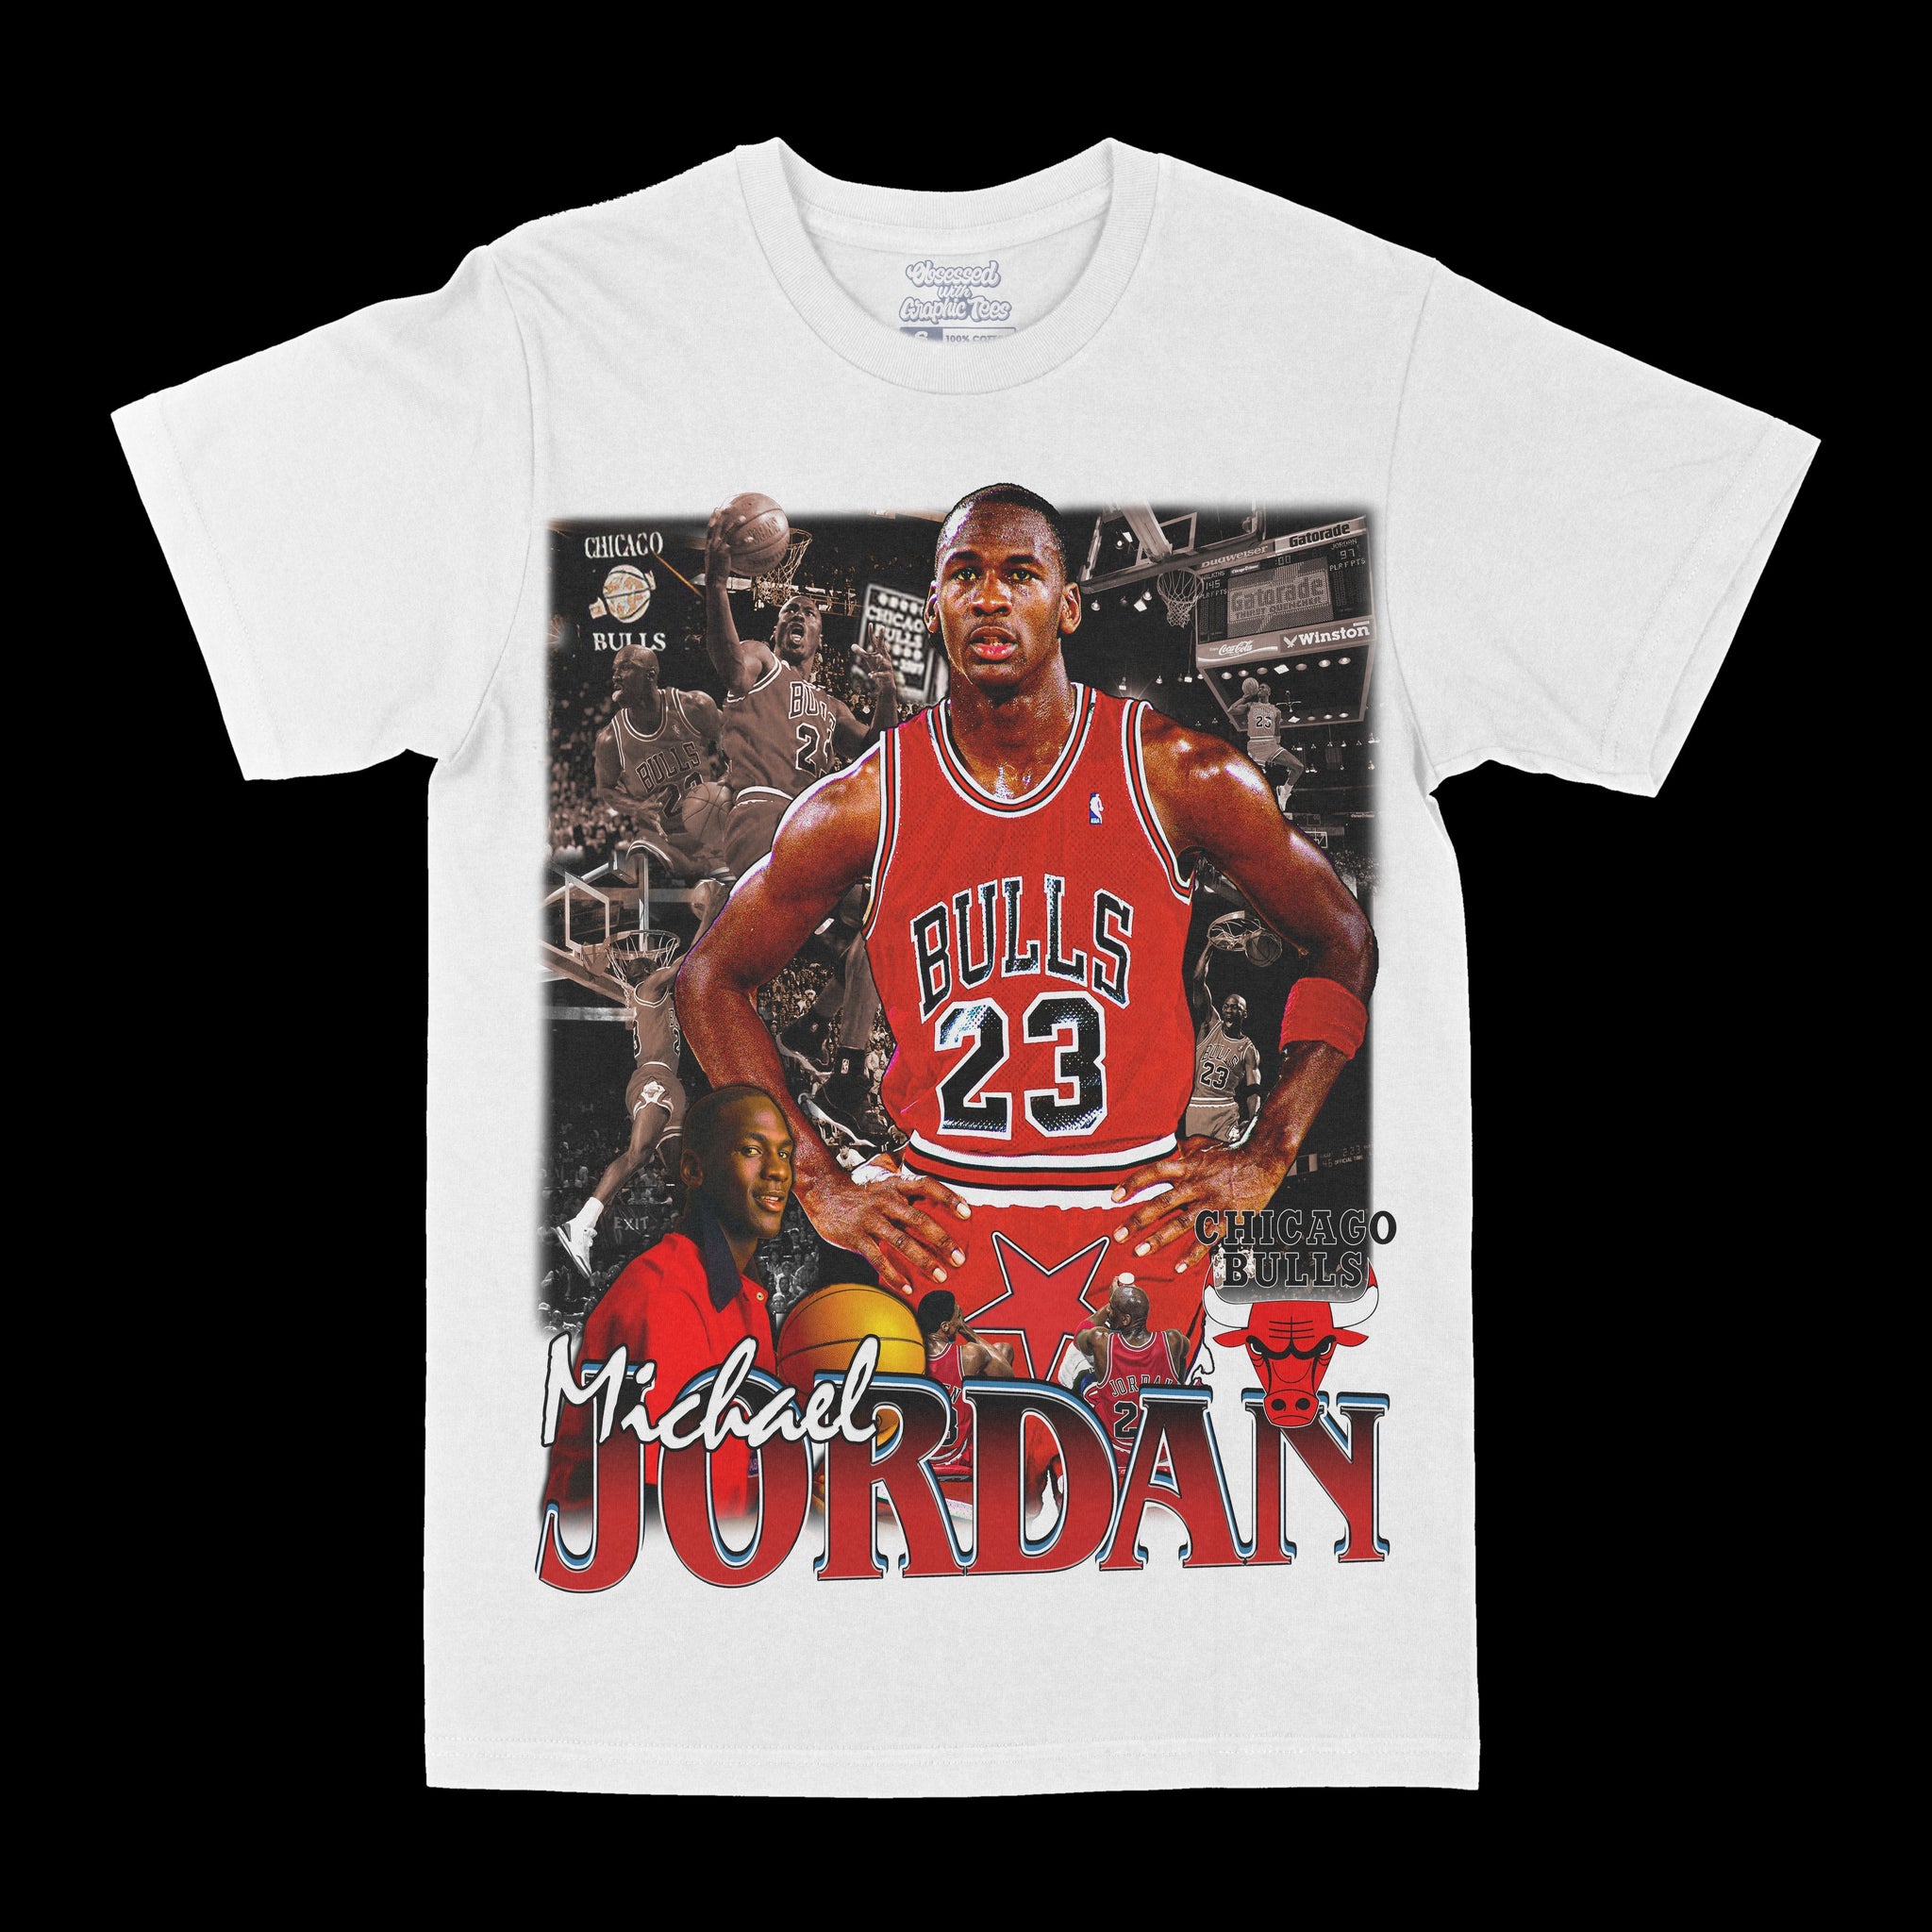 Michael Jordan "Flying High" Graphic Tee